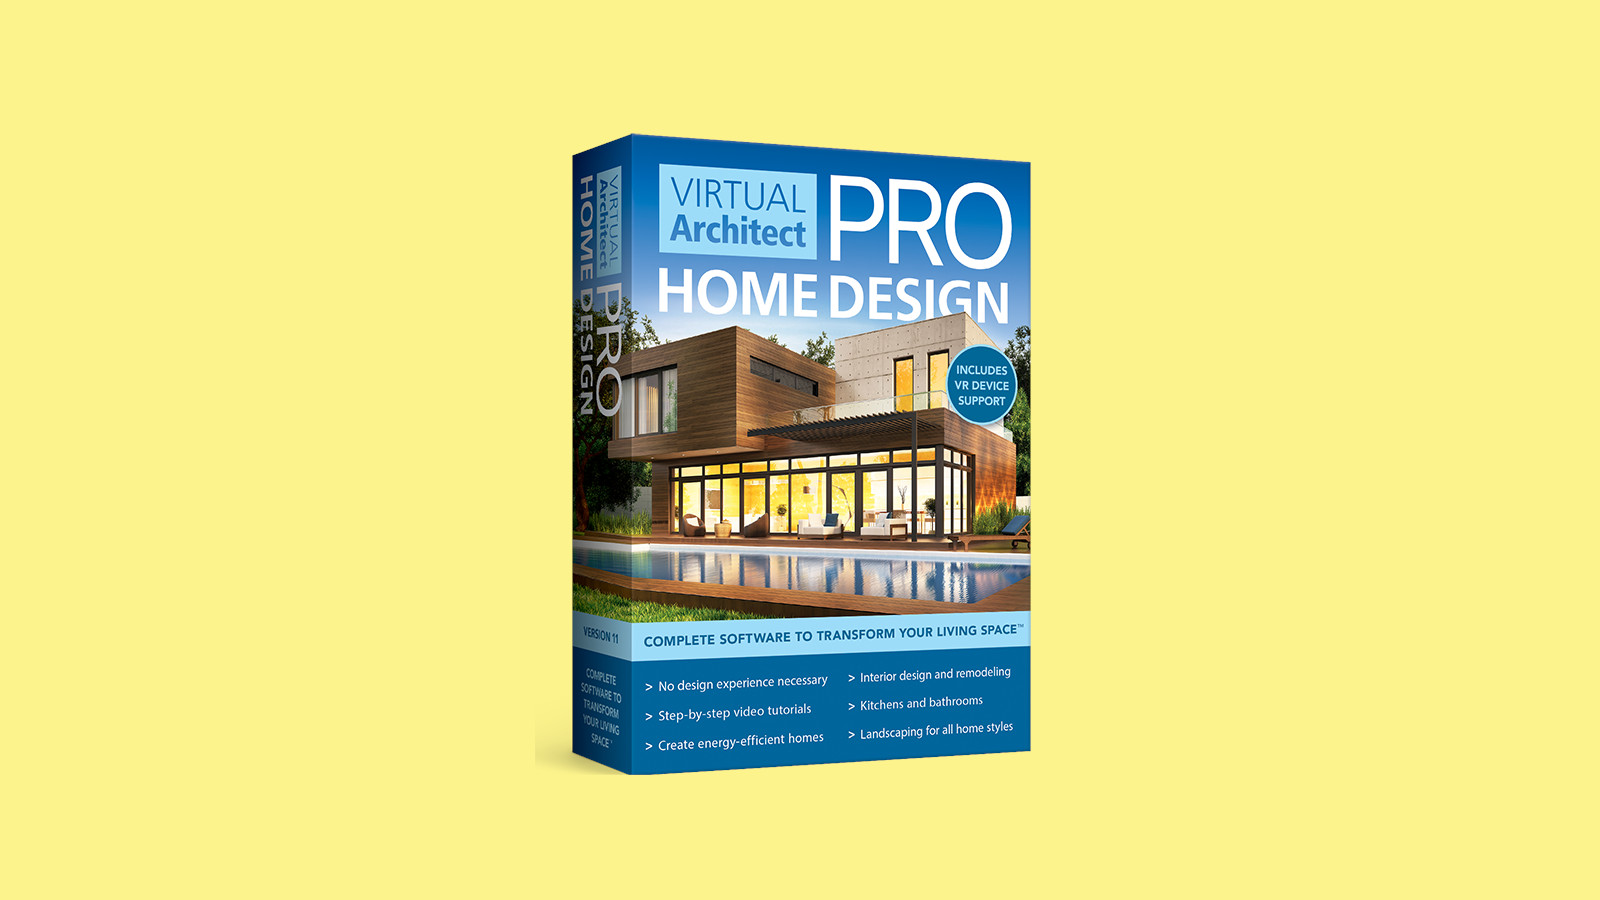 [$ 258.03] Virtual Architect Professional Home Design 11 CD Key